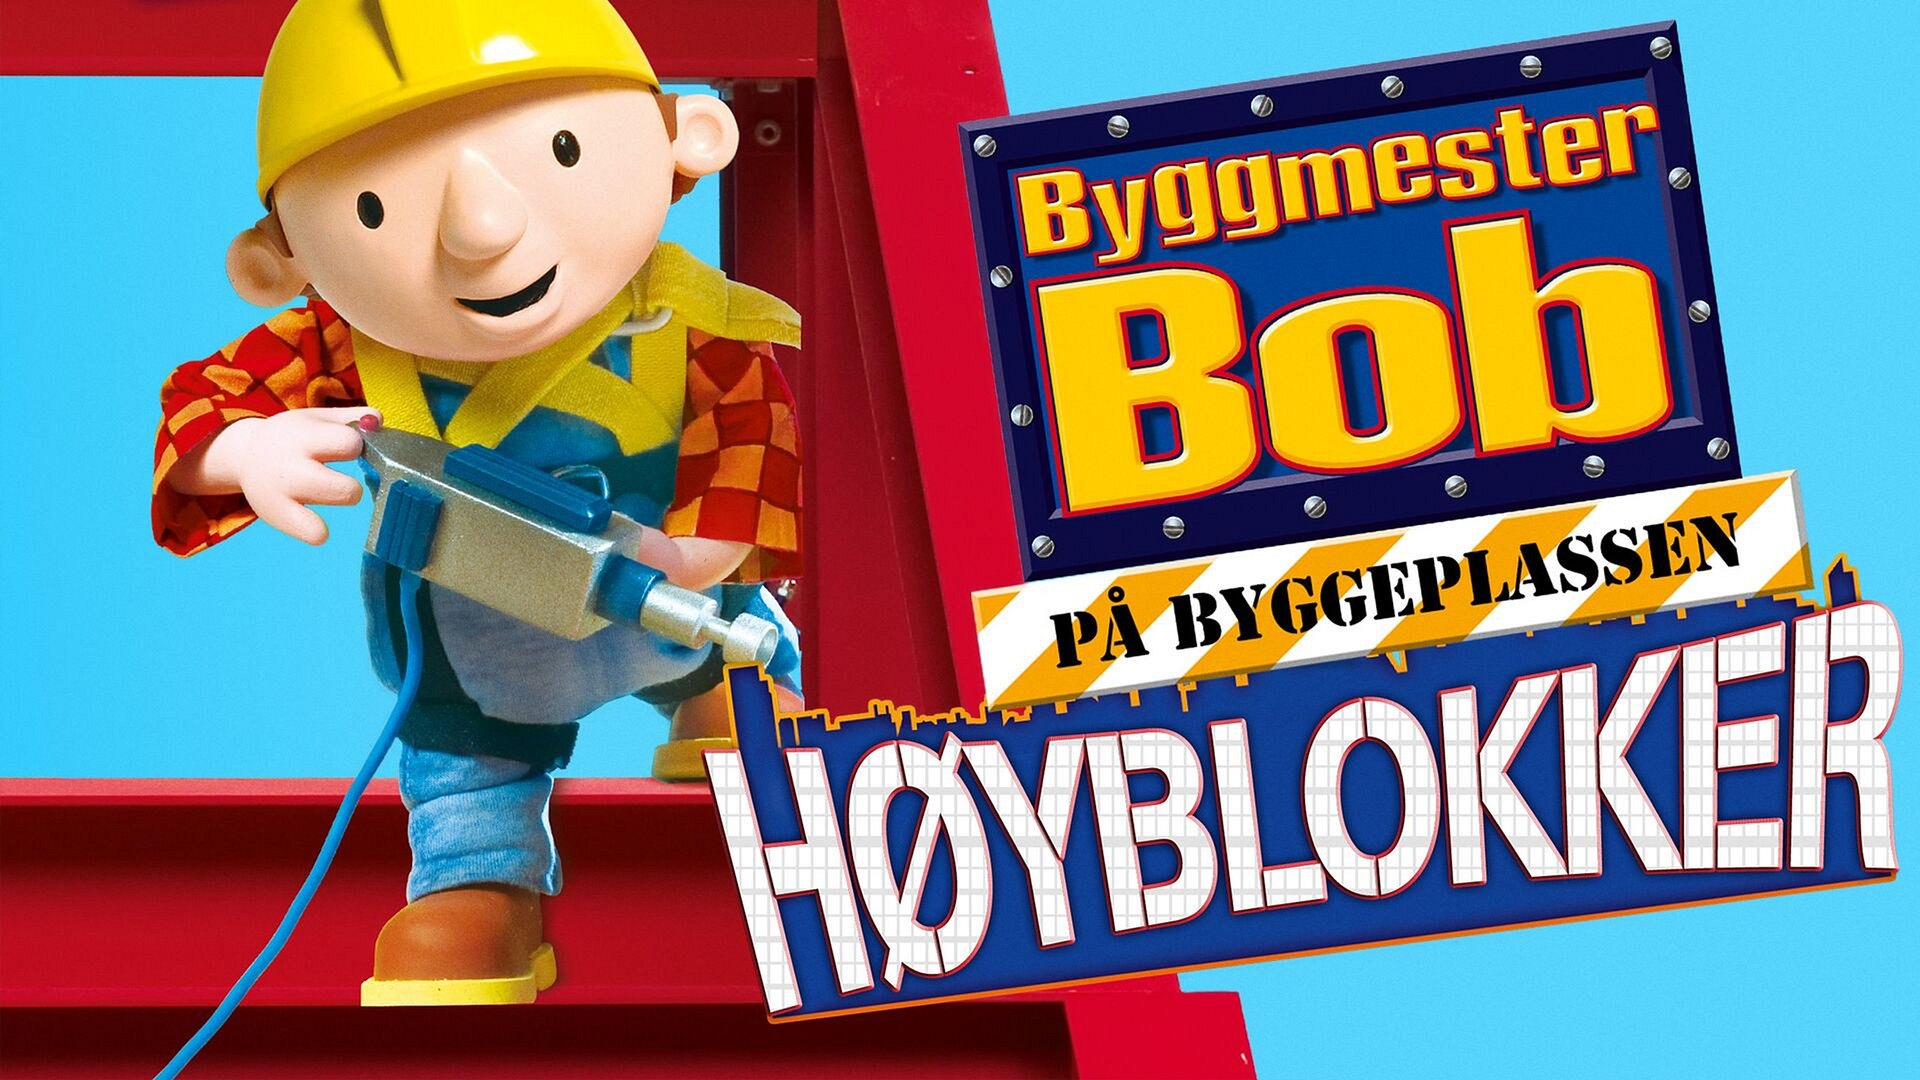 Byggmester Bob på byggeplassen - Høyblokker (Norsk tale)